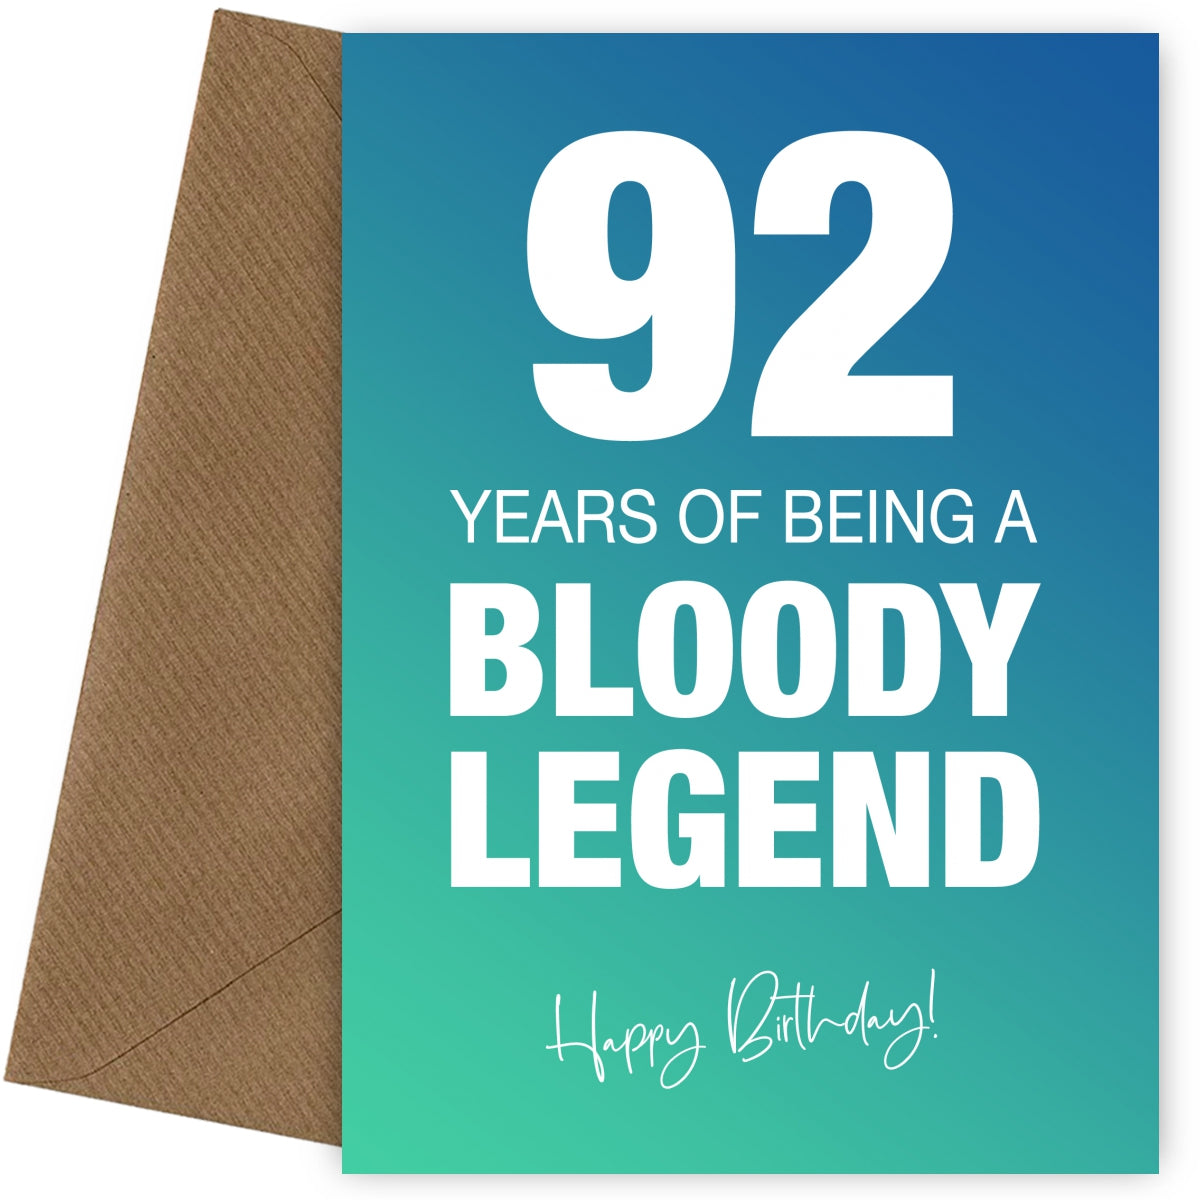 Funny 92nd Birthday Cards for Men & Women - Bloody Legend - Joke Happy Birthday Card